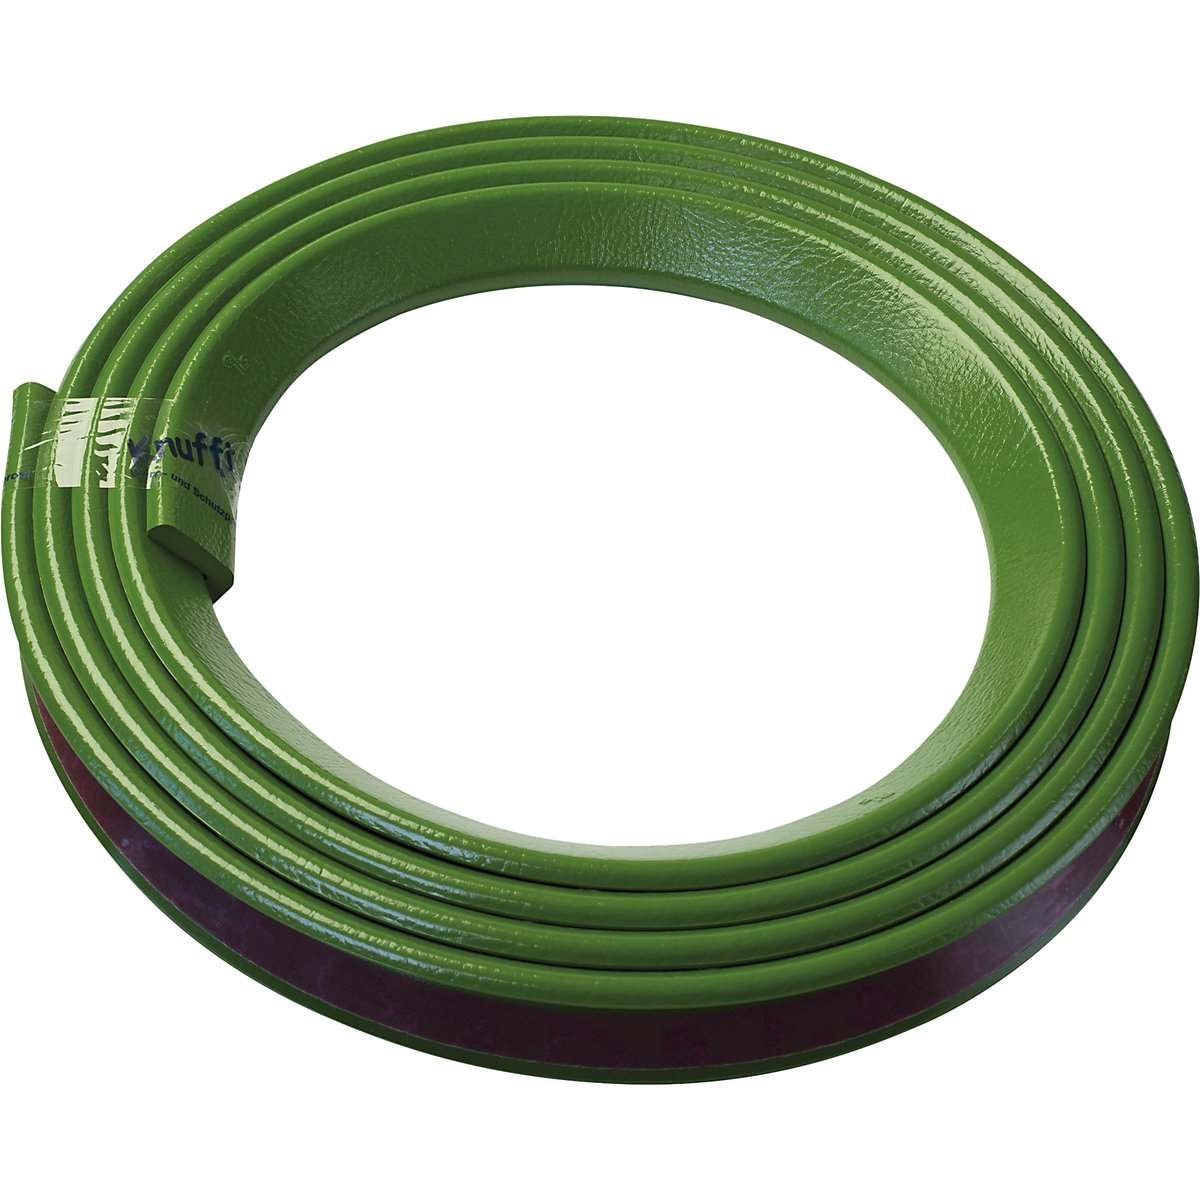 Knuffi® corner protection – SHG, type H, 1 x 5 m roll, green-24